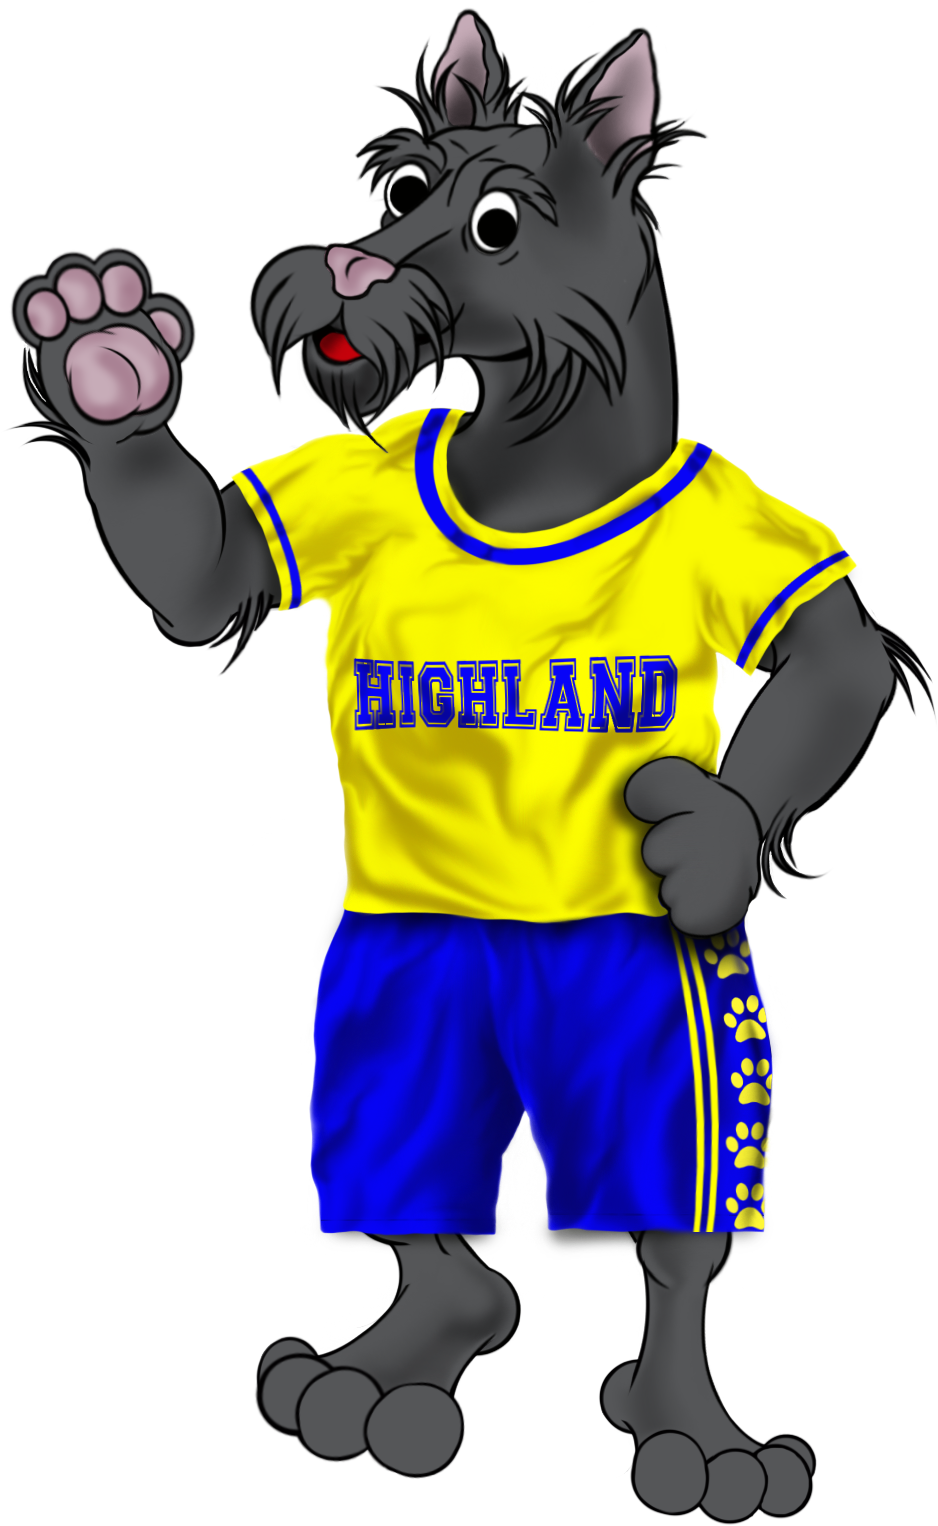 Cartoon Image Of Highland Scottie Dog Mascot Waving - Mascot (1088x1605)